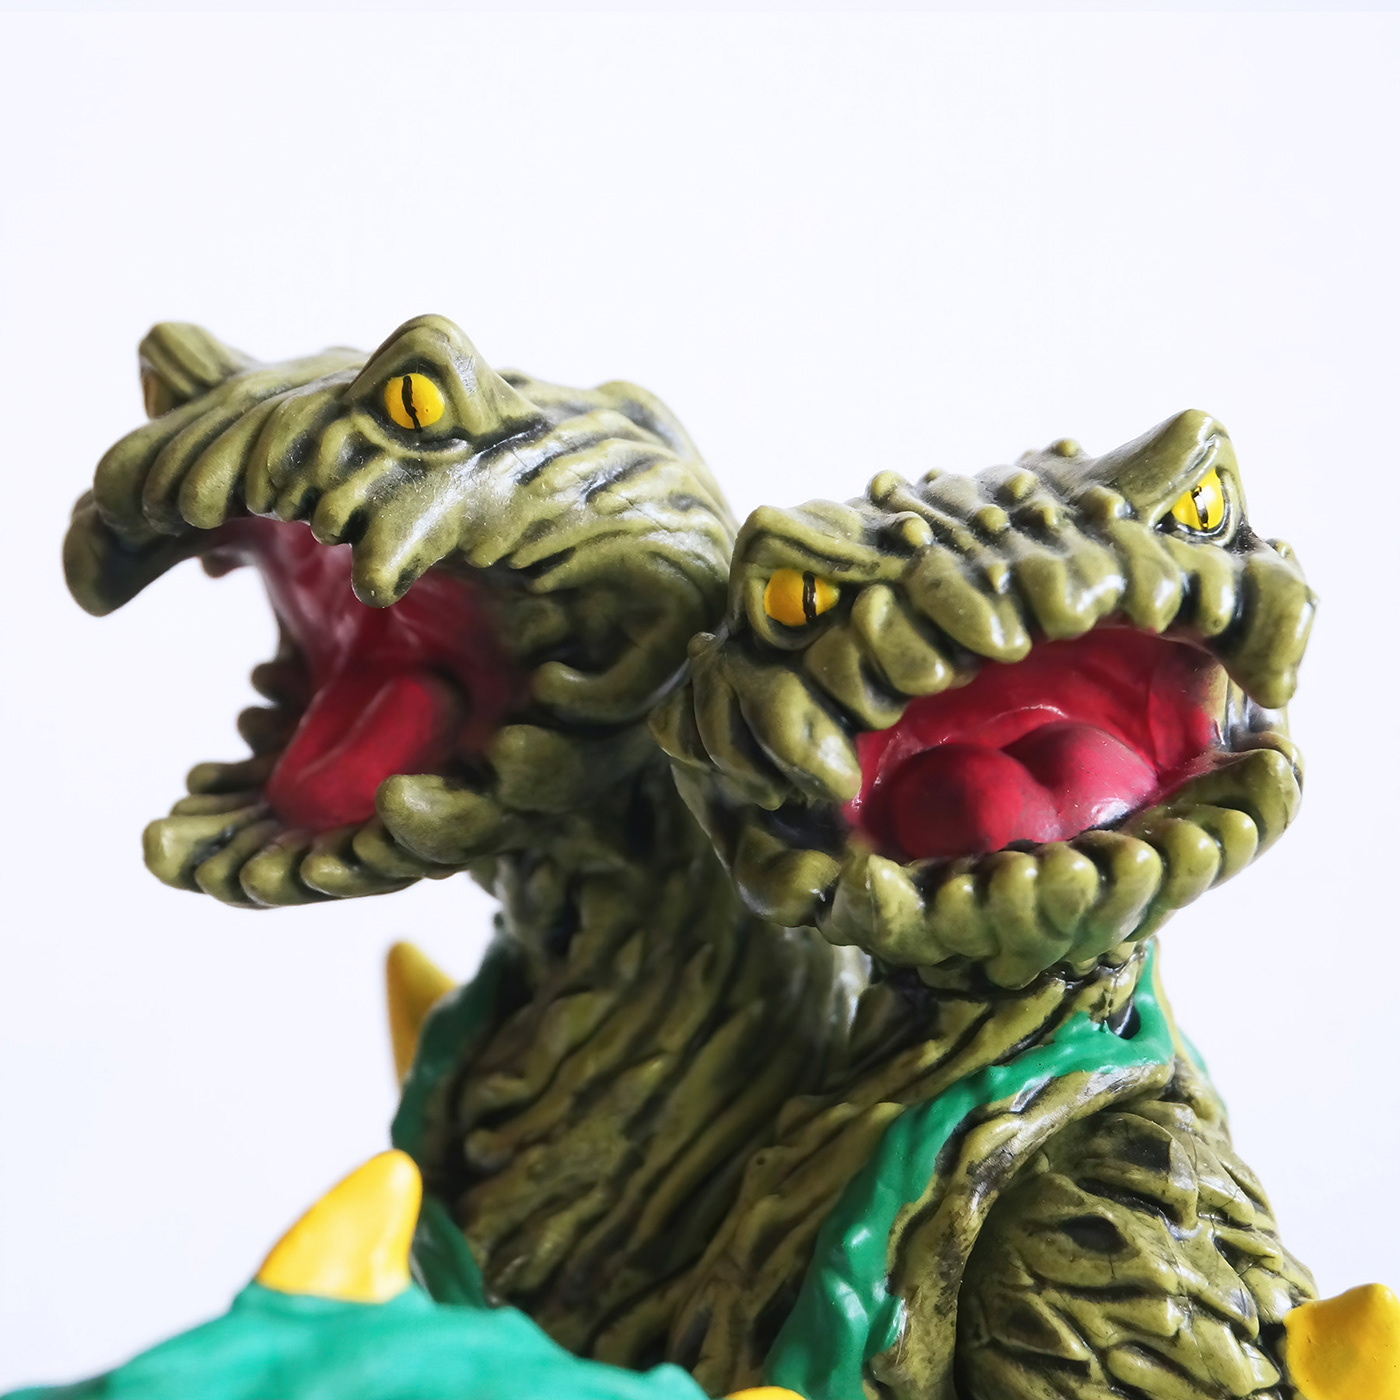 creature eldrador figure jungle monster Plant product design  Schleich toy design  toys